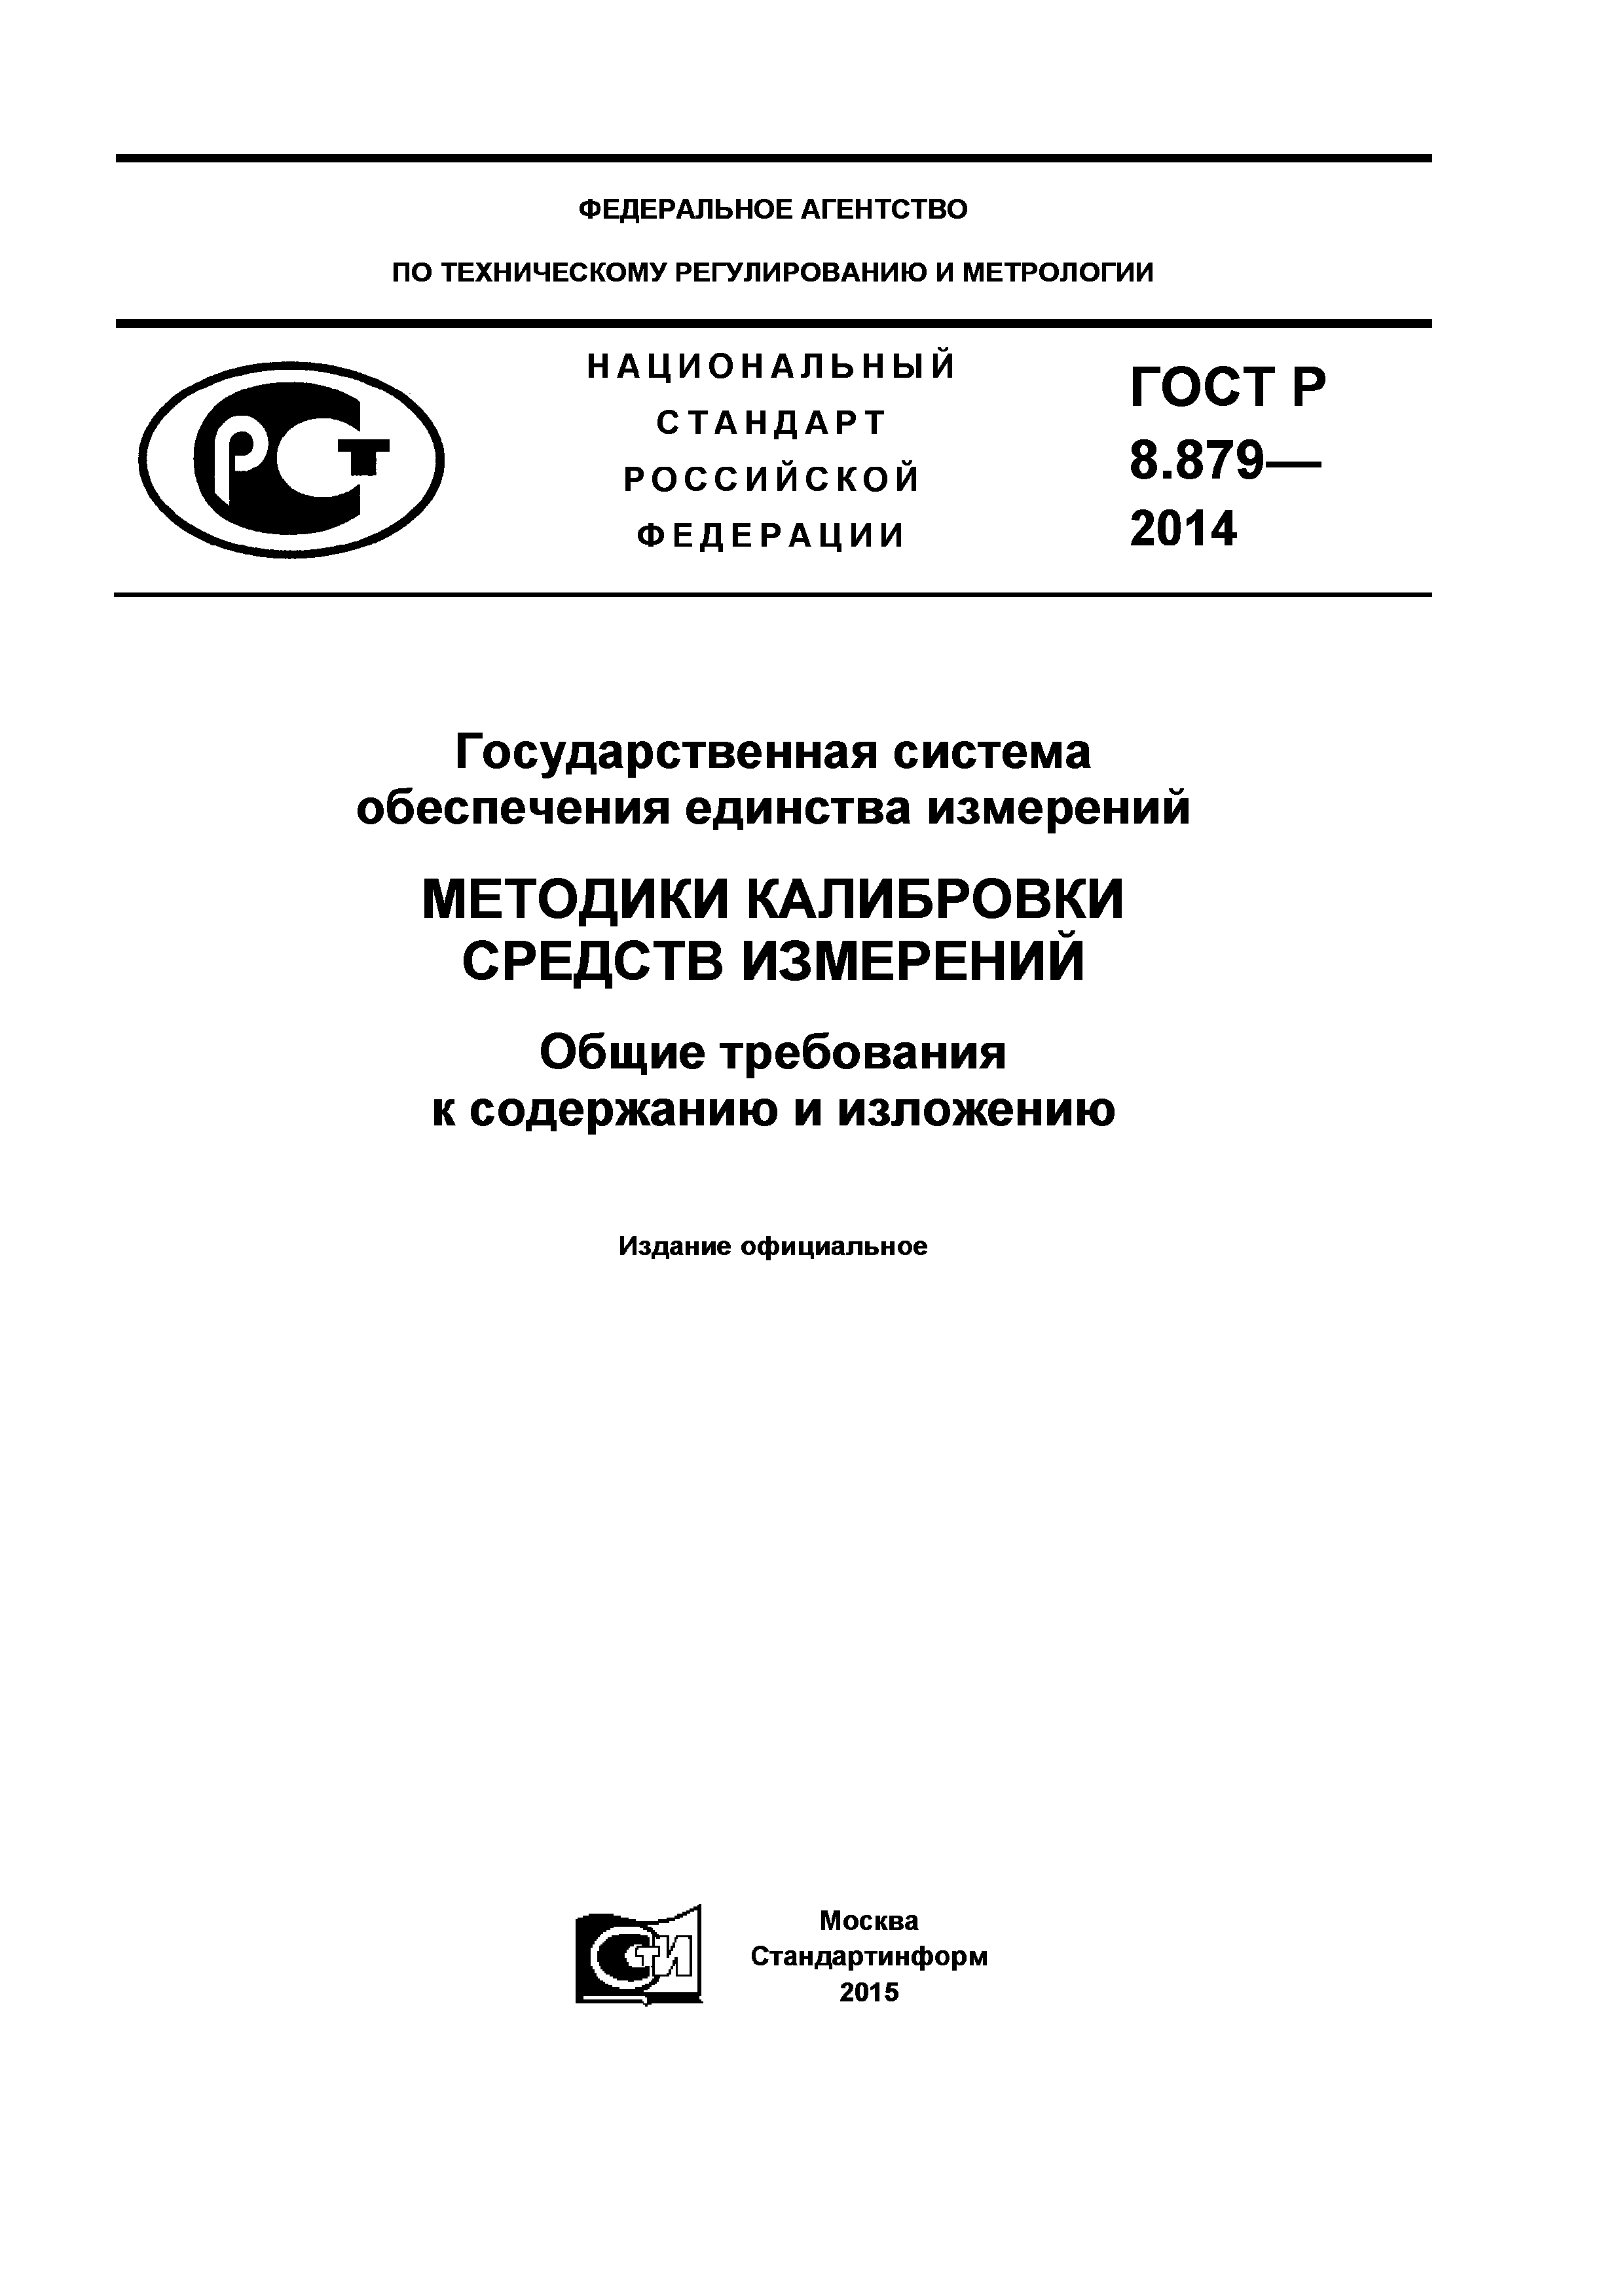 ГОСТ Р 8.879-2014